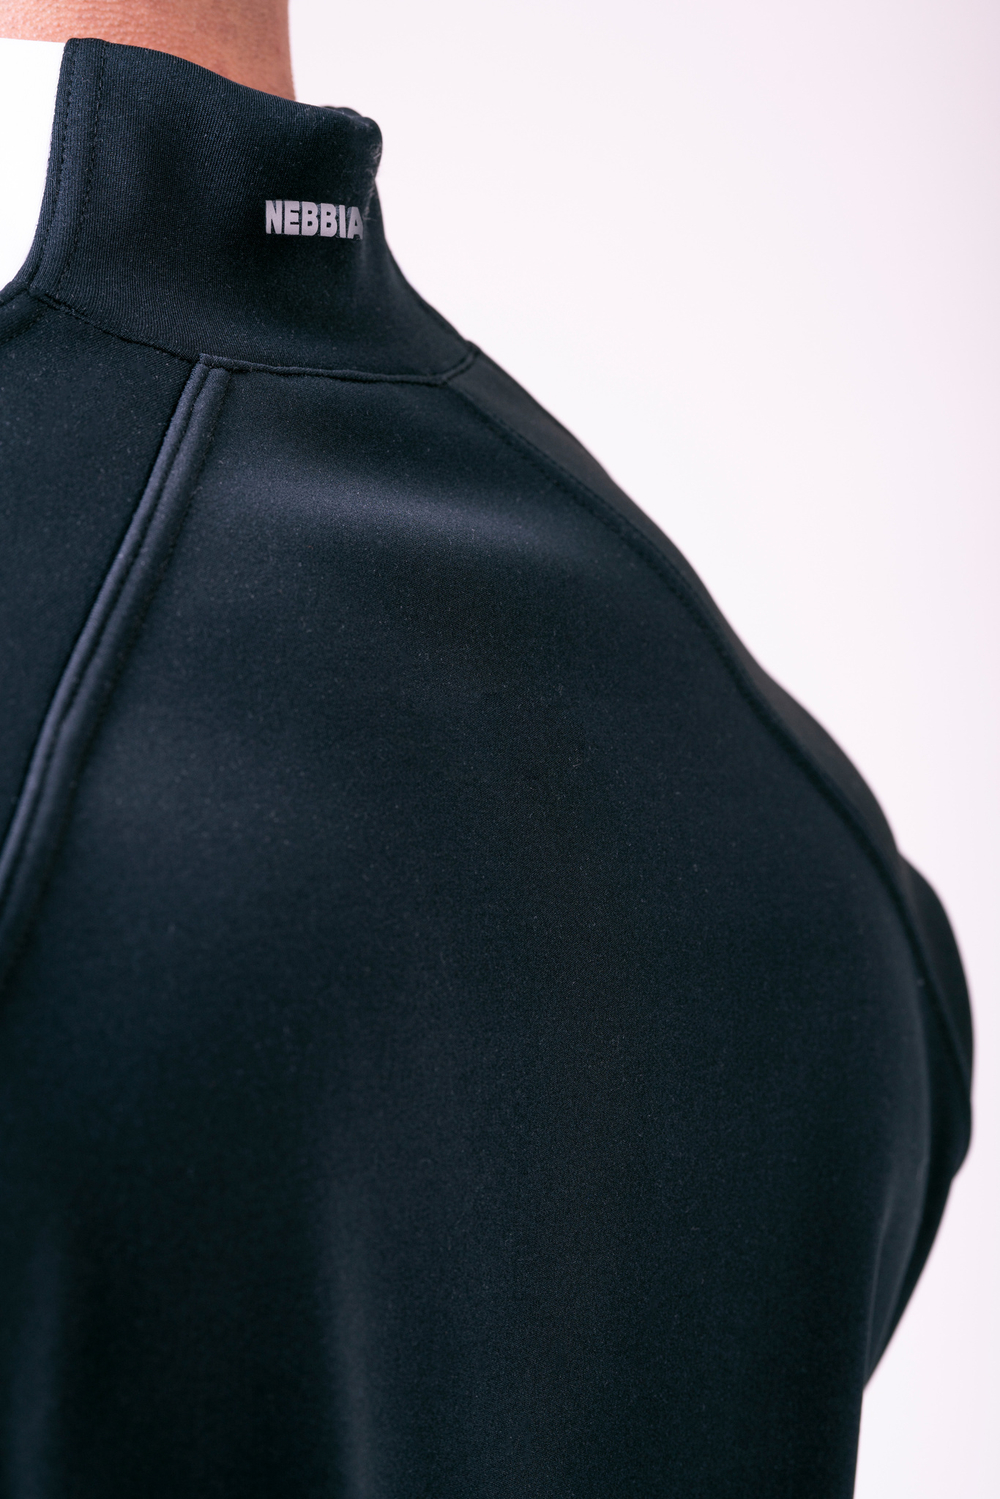 Кофта мужская Iconic Nebbia jacket of Champions 176 black